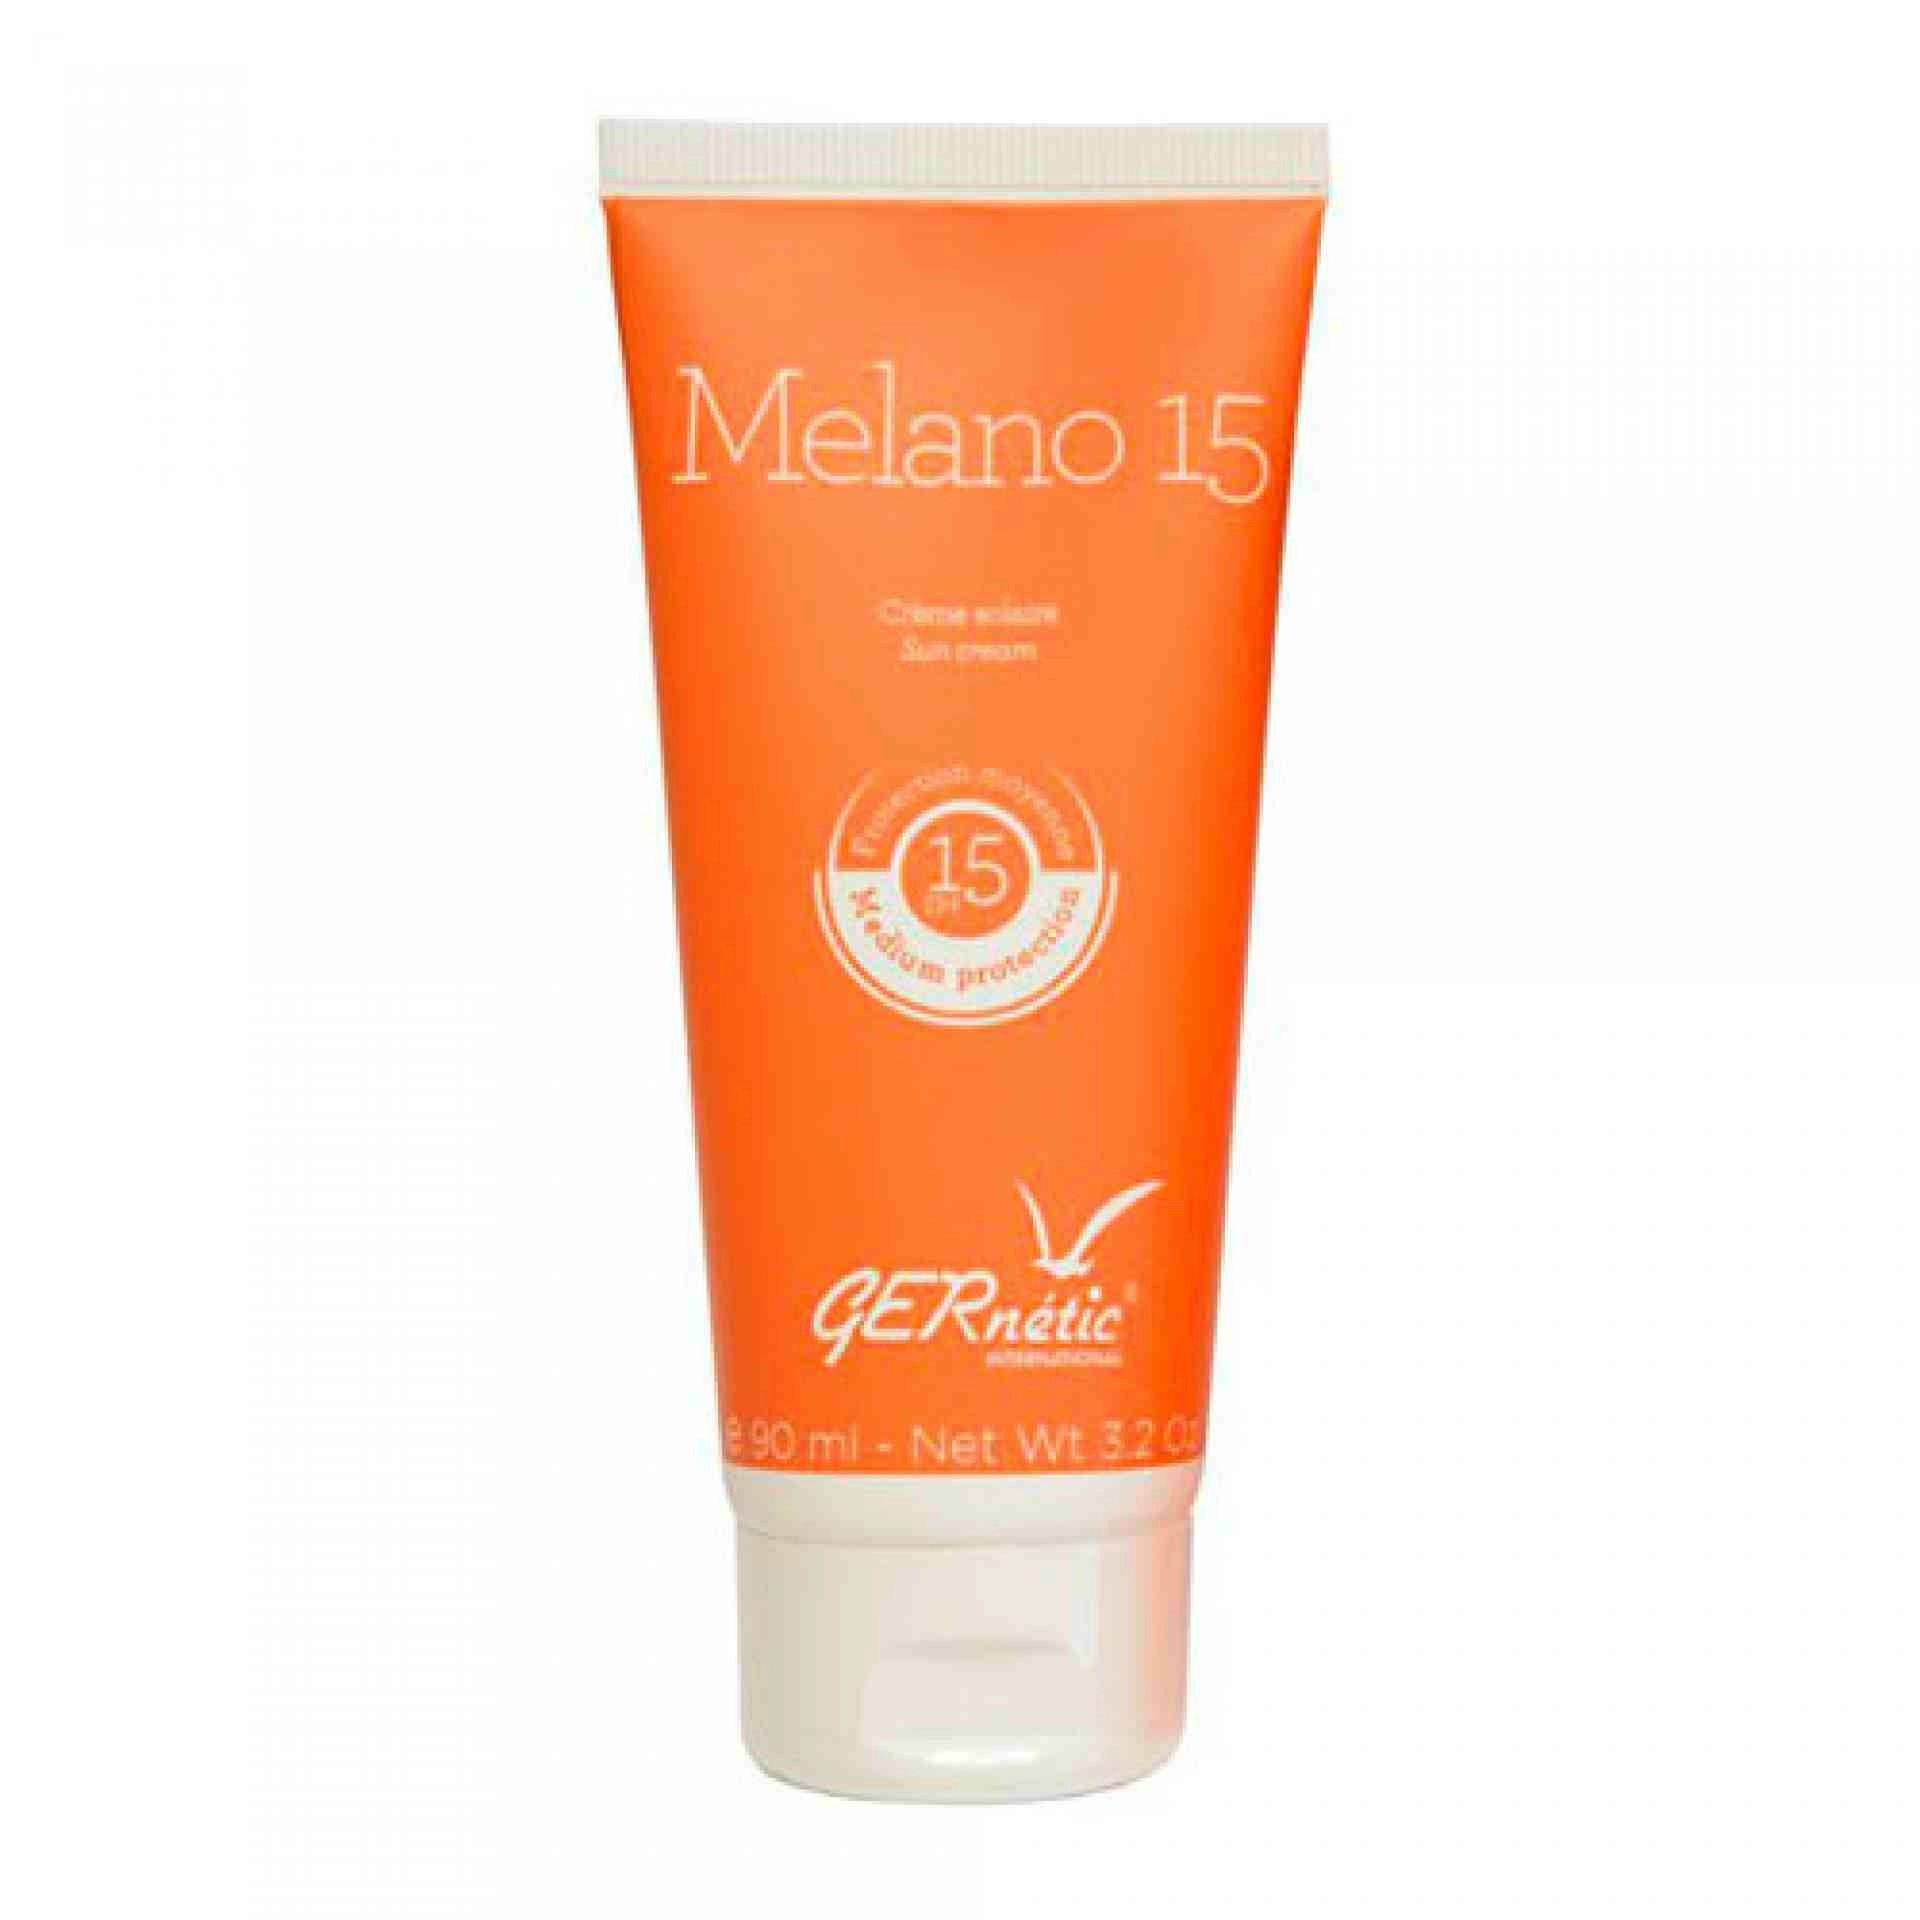 Melano 15 | Crema solar SPF 15 90ml - Gernétic ®